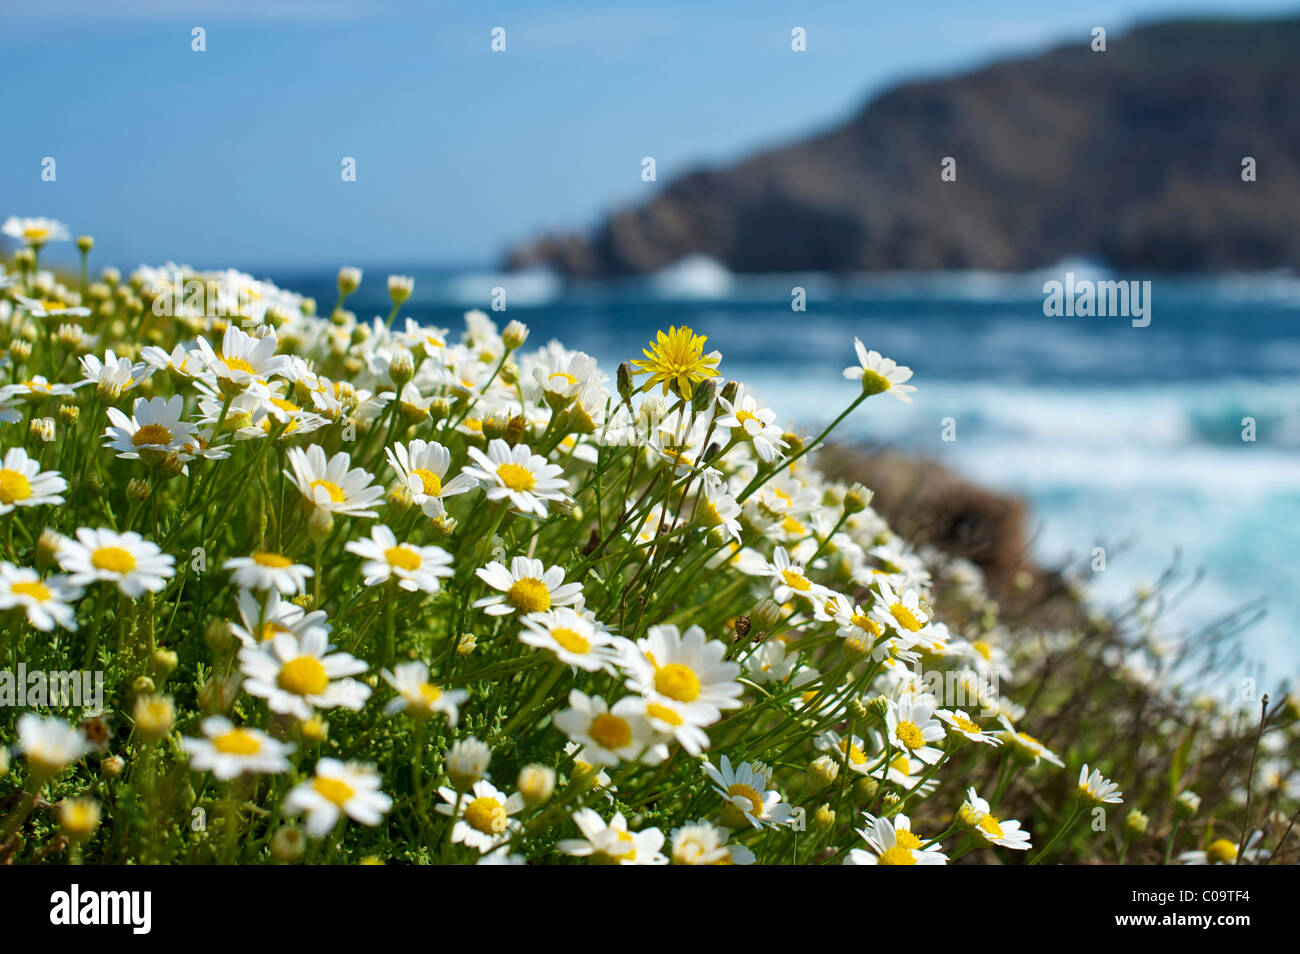 Blumen am Meer, Cap de Fornells, Menorca, Balearen, Spanien, Europa  Stockfotografie - Alamy